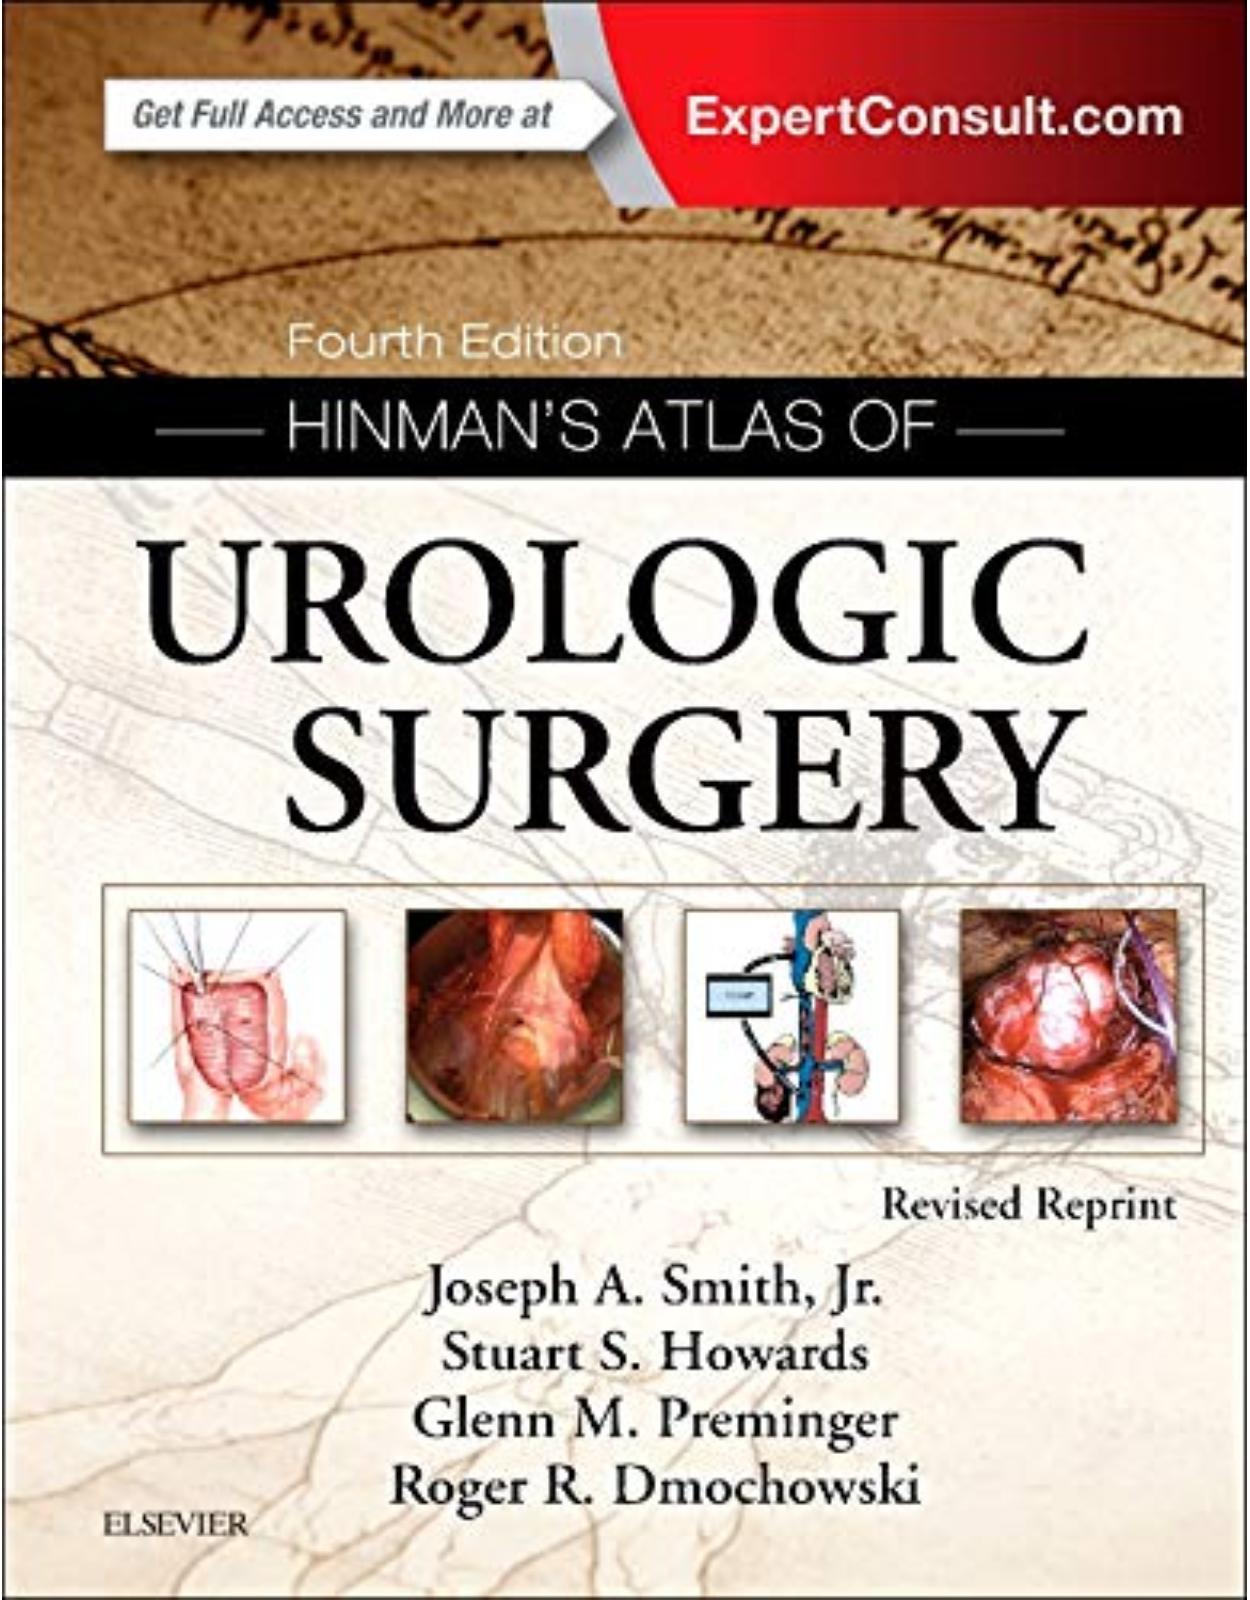 Hinman’s Atlas of Urologic Surgery Revised Reprint, 4e 